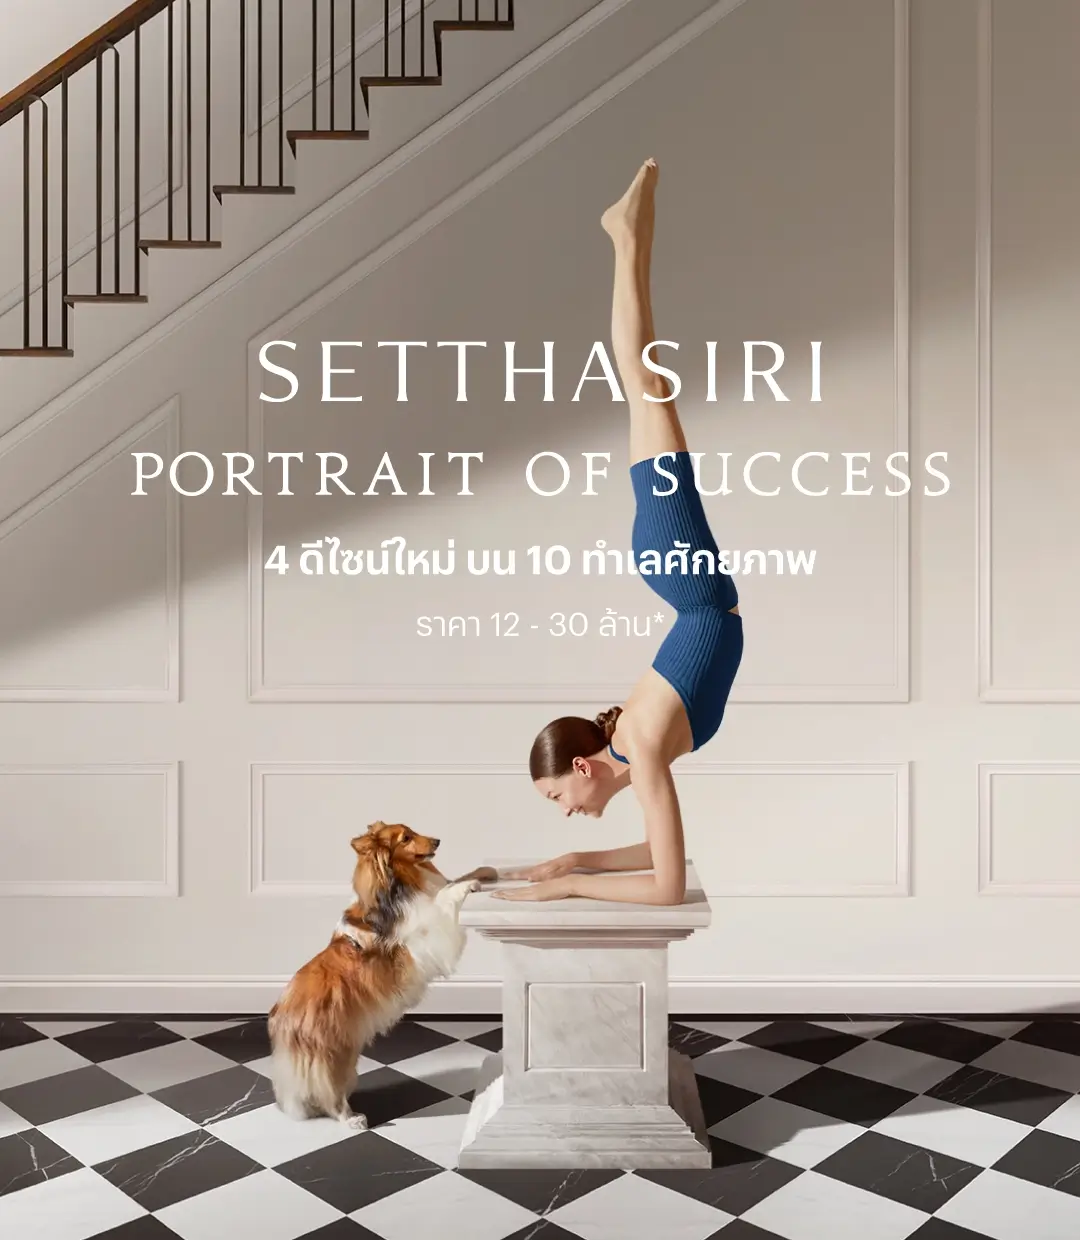 Setthasiri Branding Campaign